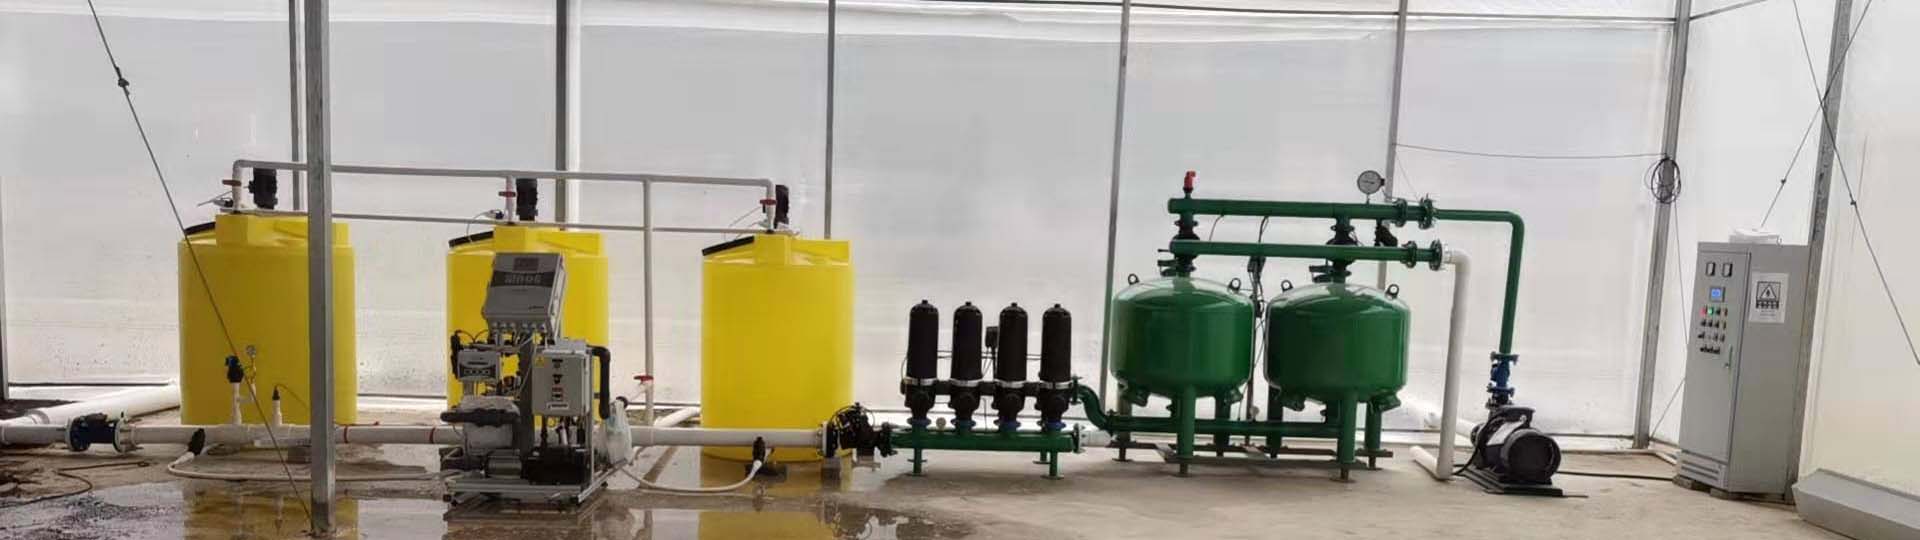 Greenhouse irrigation system 